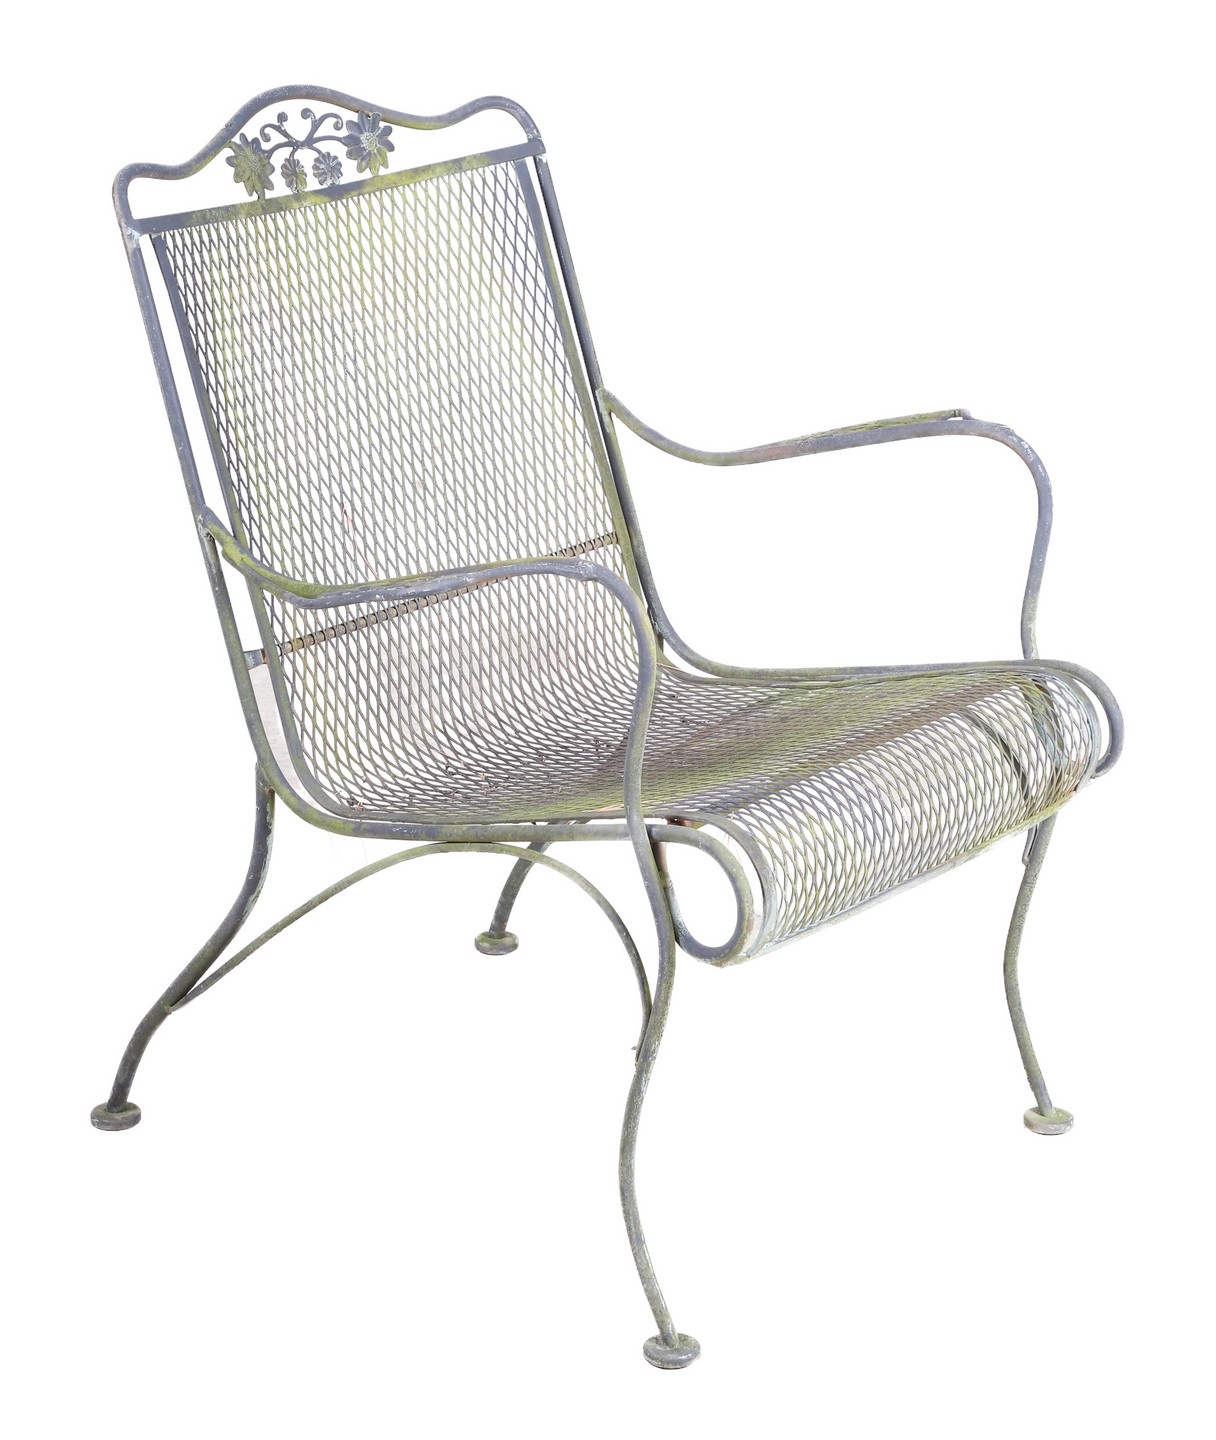 Salterini patio lounge chair floral 2e0598